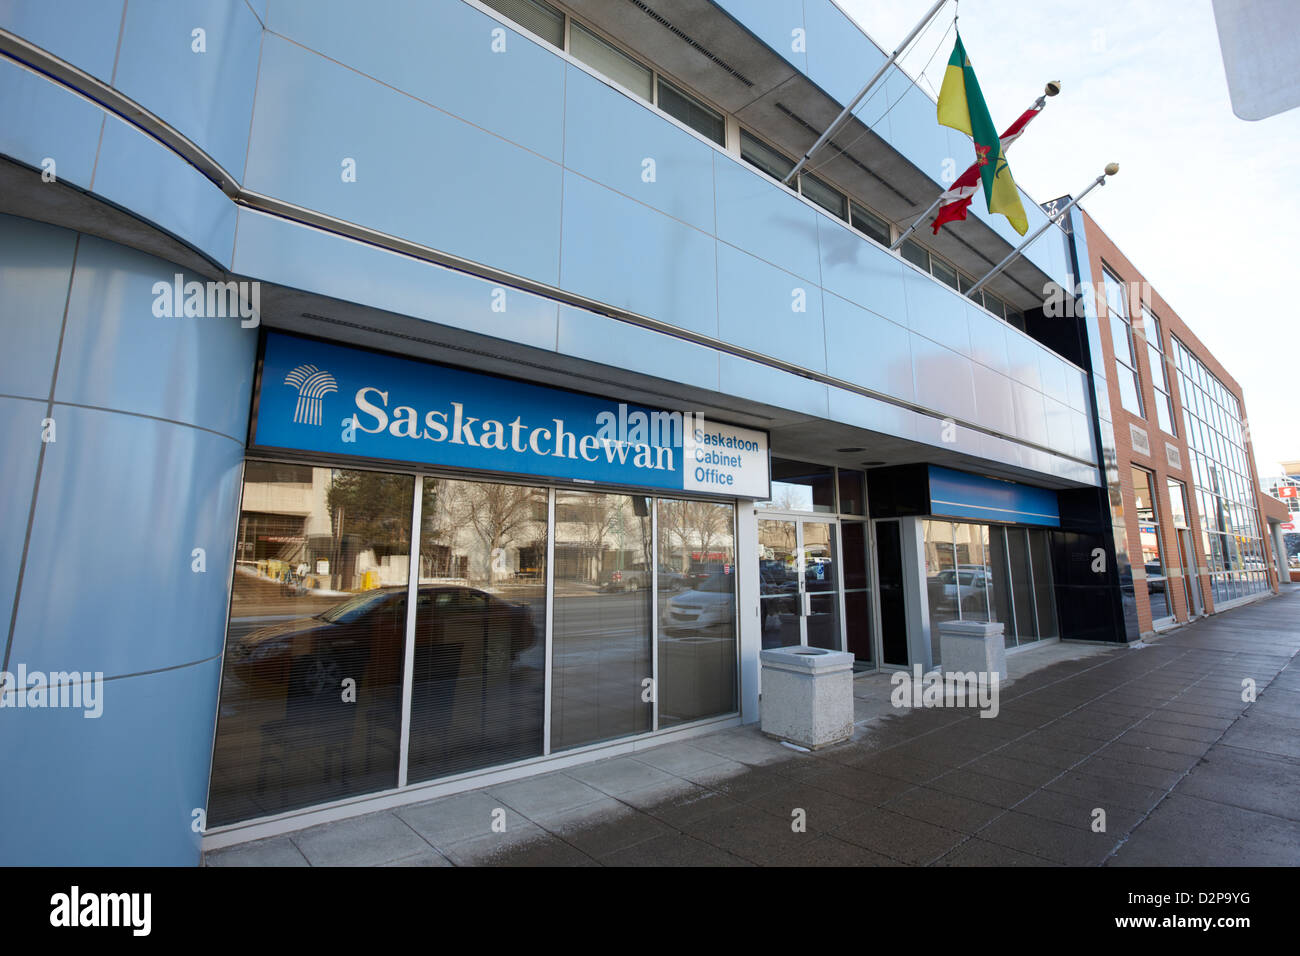 Saskatoon cabinet office in Saskatchewan Canada Stock Photo